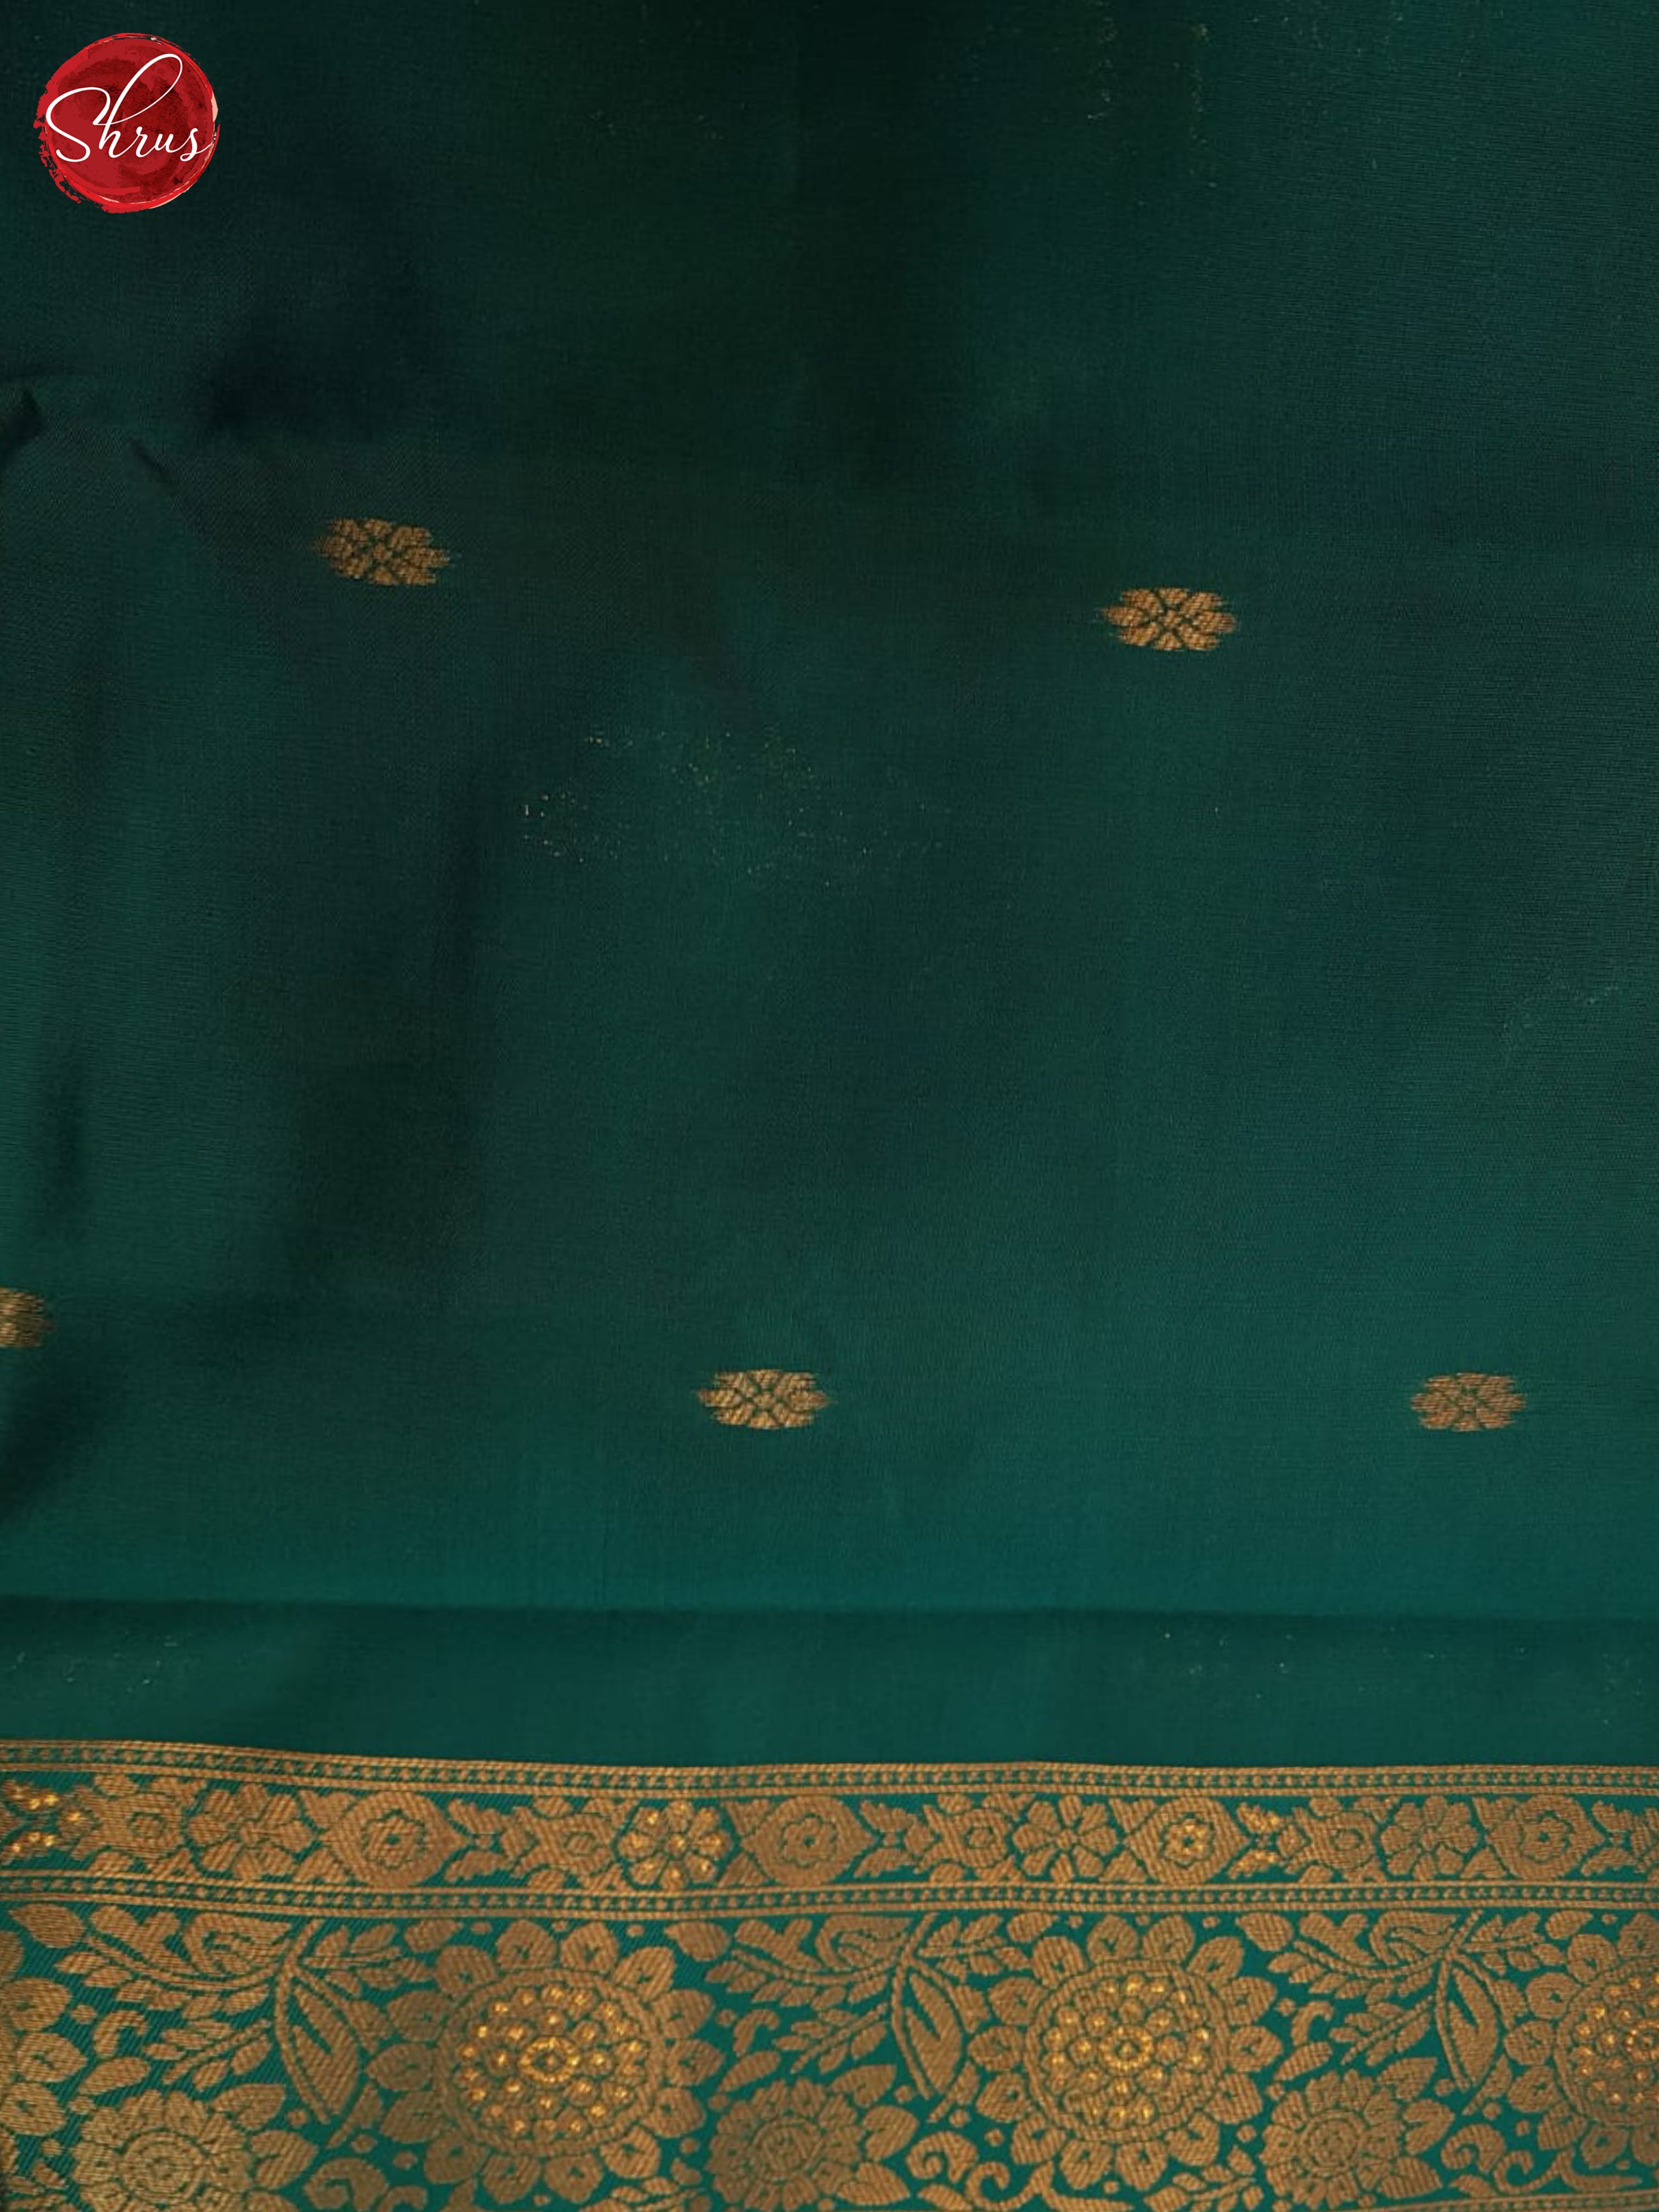 Blue And Green-Semi Kanchipuram saree - Shop on ShrusEternity.com